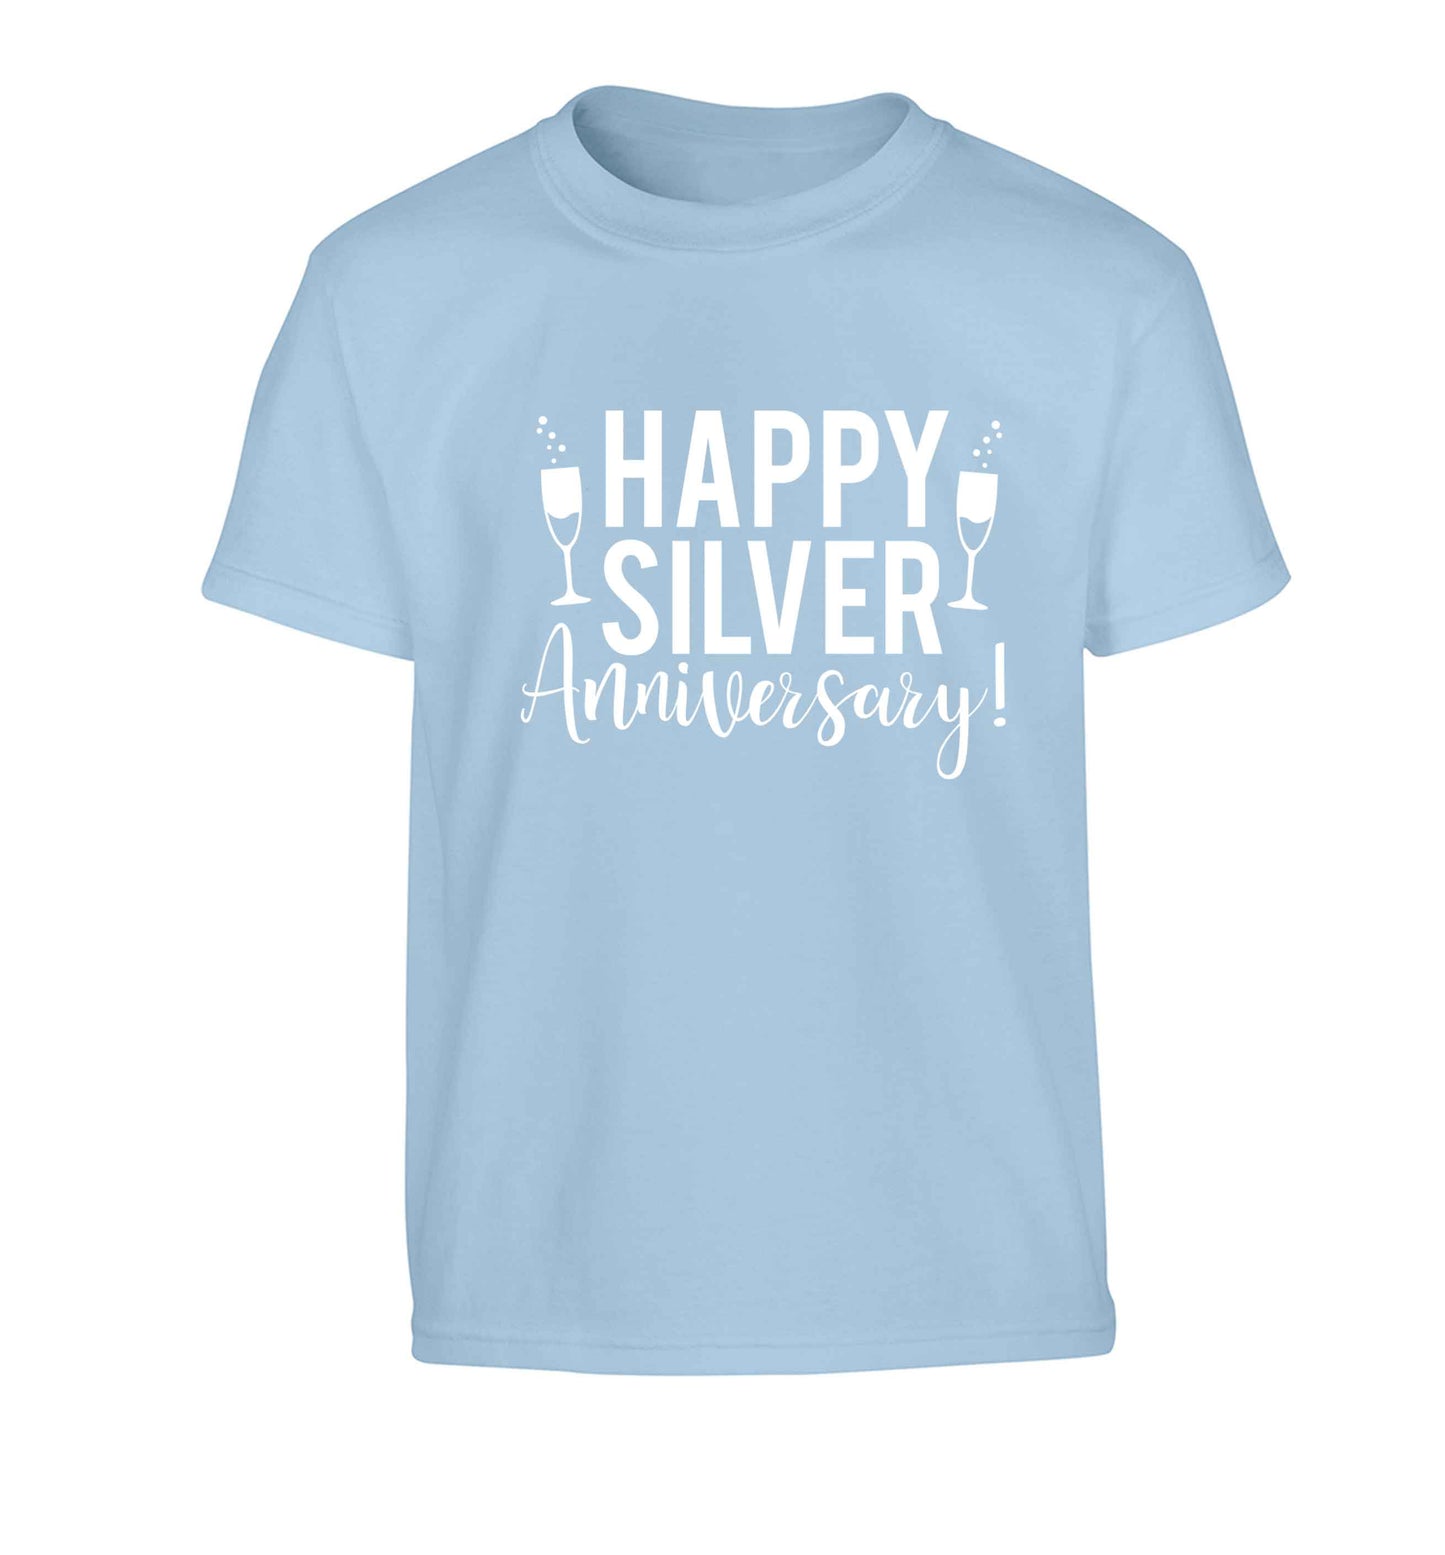 Happy silver anniversary! Children's light blue Tshirt 12-13 Years